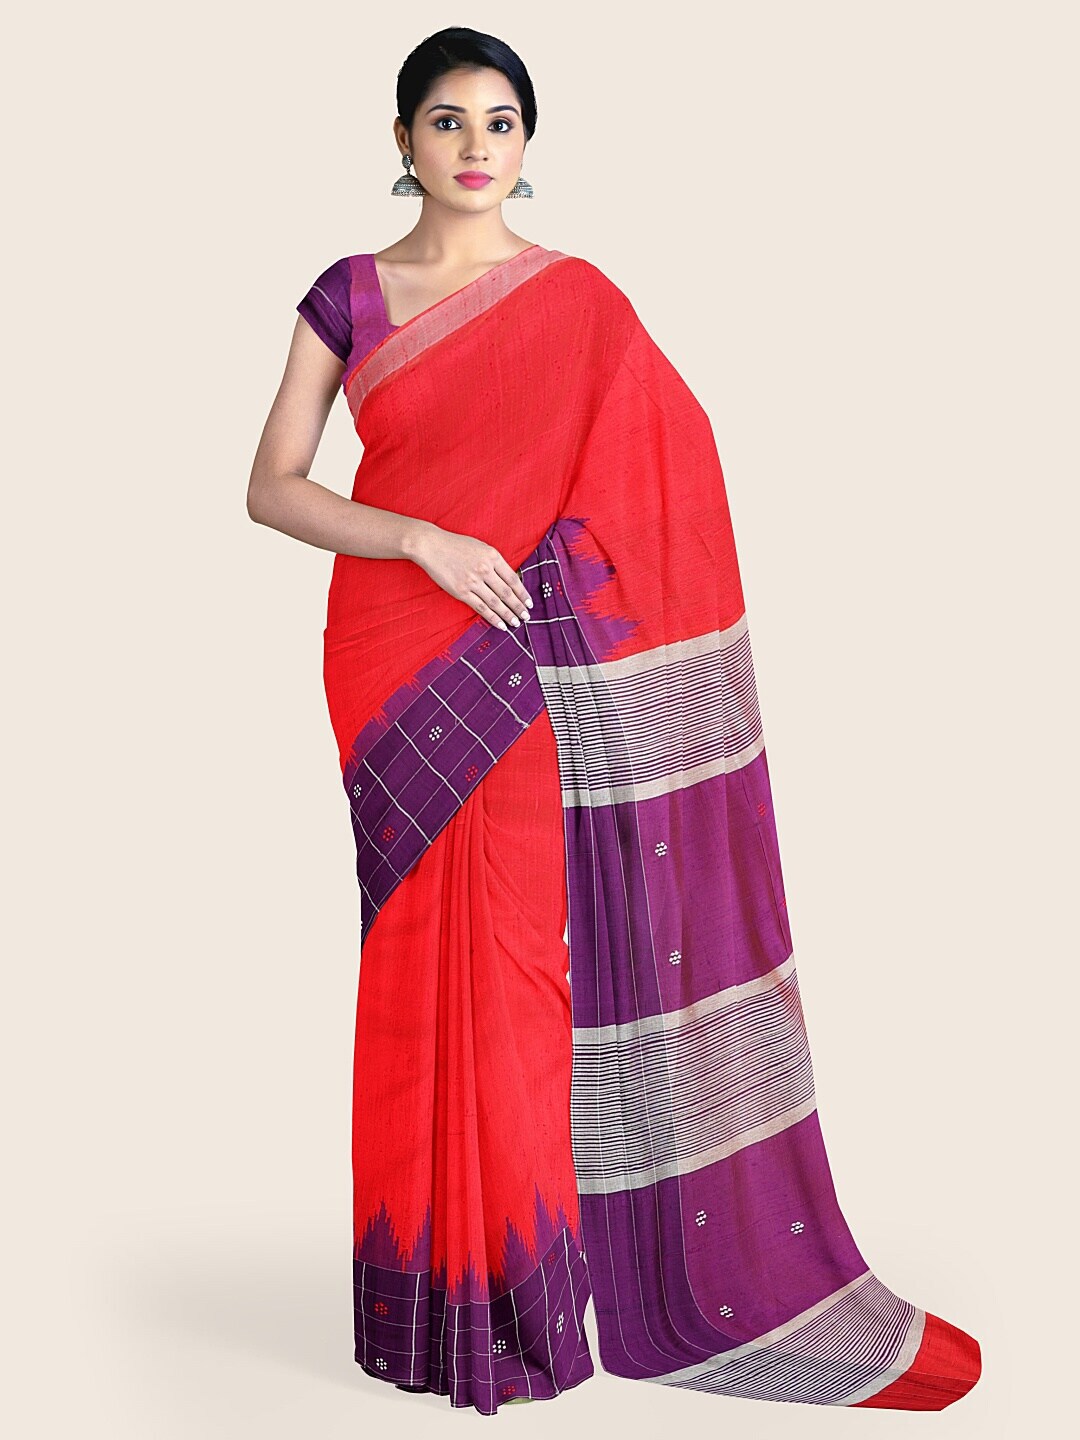 Pothys Red & Purple Jute Silk Saree Price in India